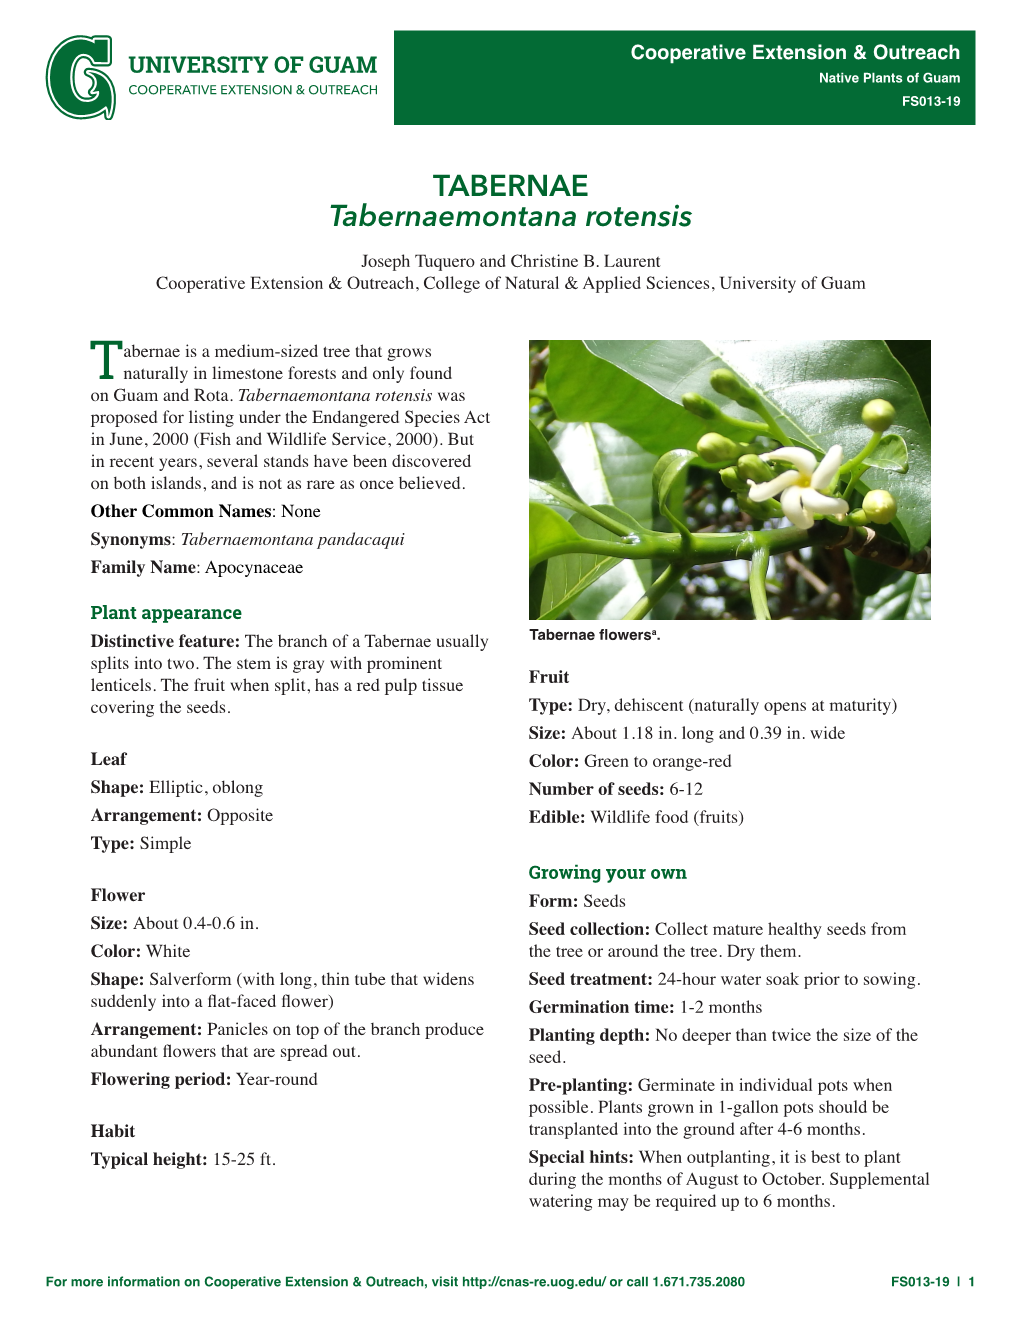 Tabernaemontana Rotensis TABERNAE